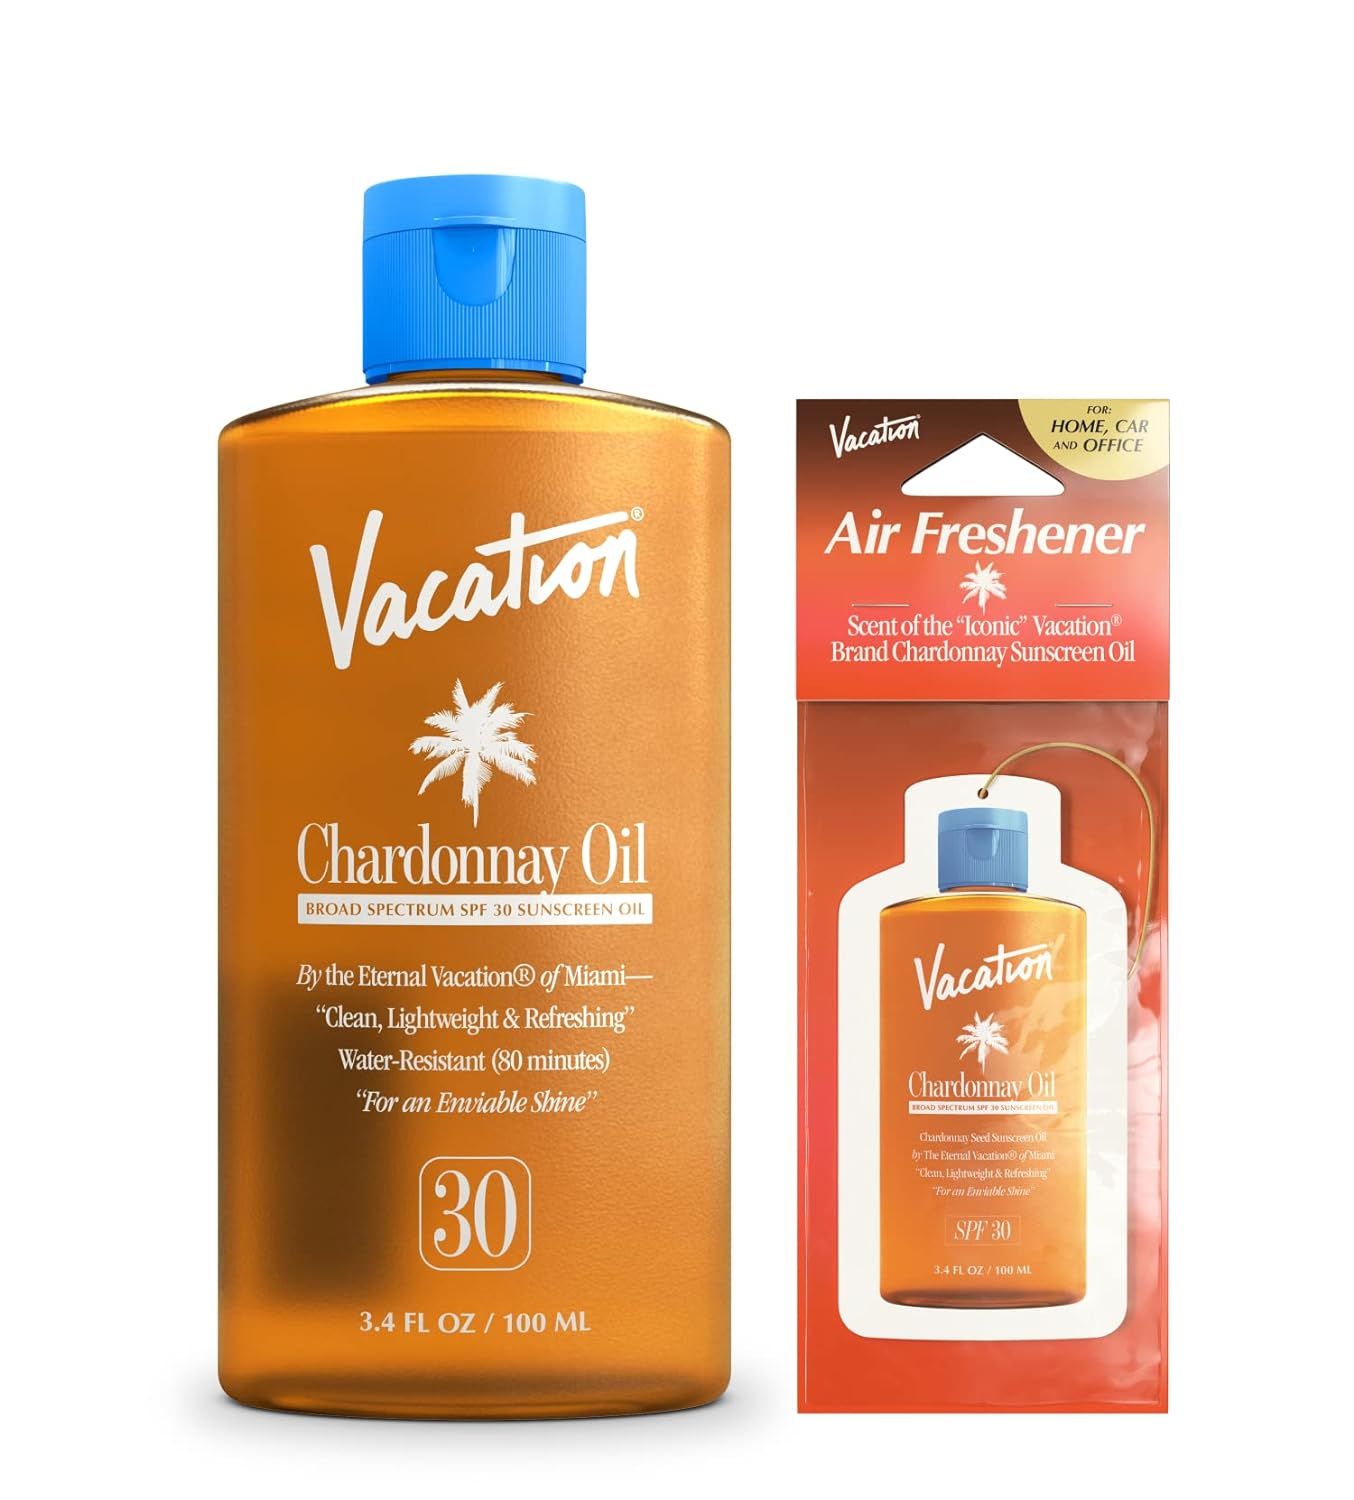 Vacation Chardonnay Oil SPF 30 + Air Freshener Bundle, Vegan Suntan Oil with Broad Spectrum SPF, ... | Amazon (US)